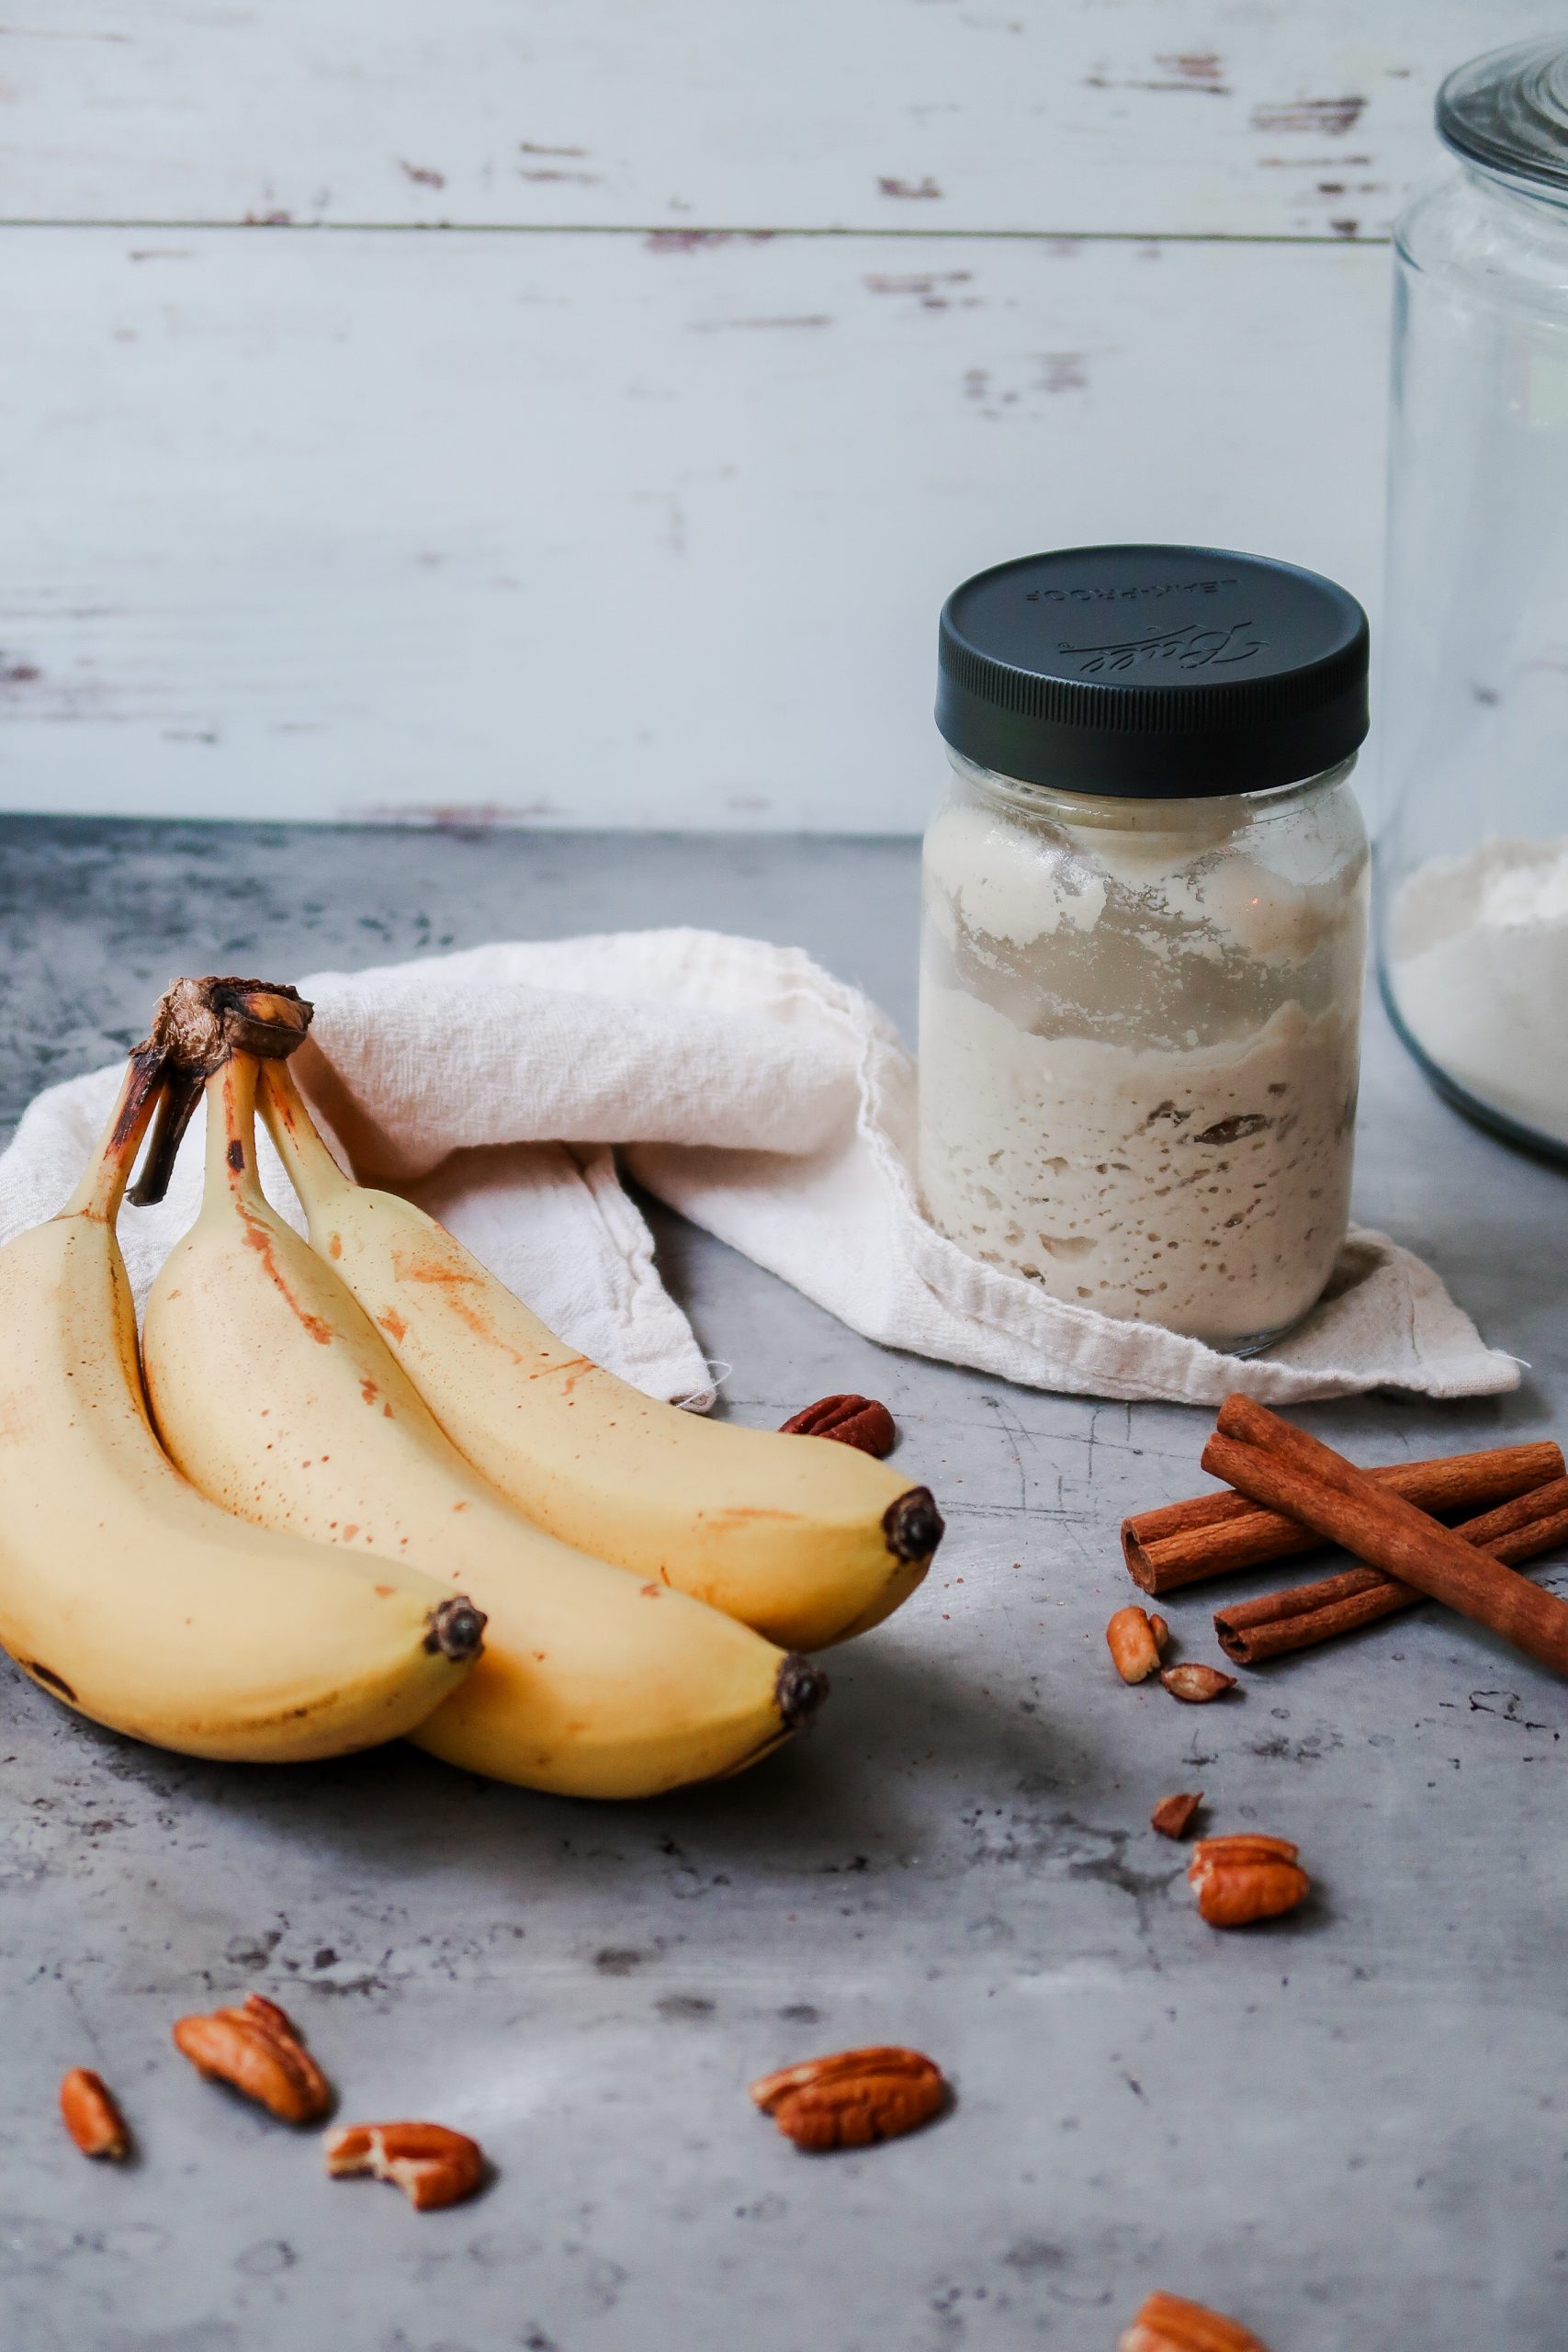 The ingredients for gluten free sourdough banana bread